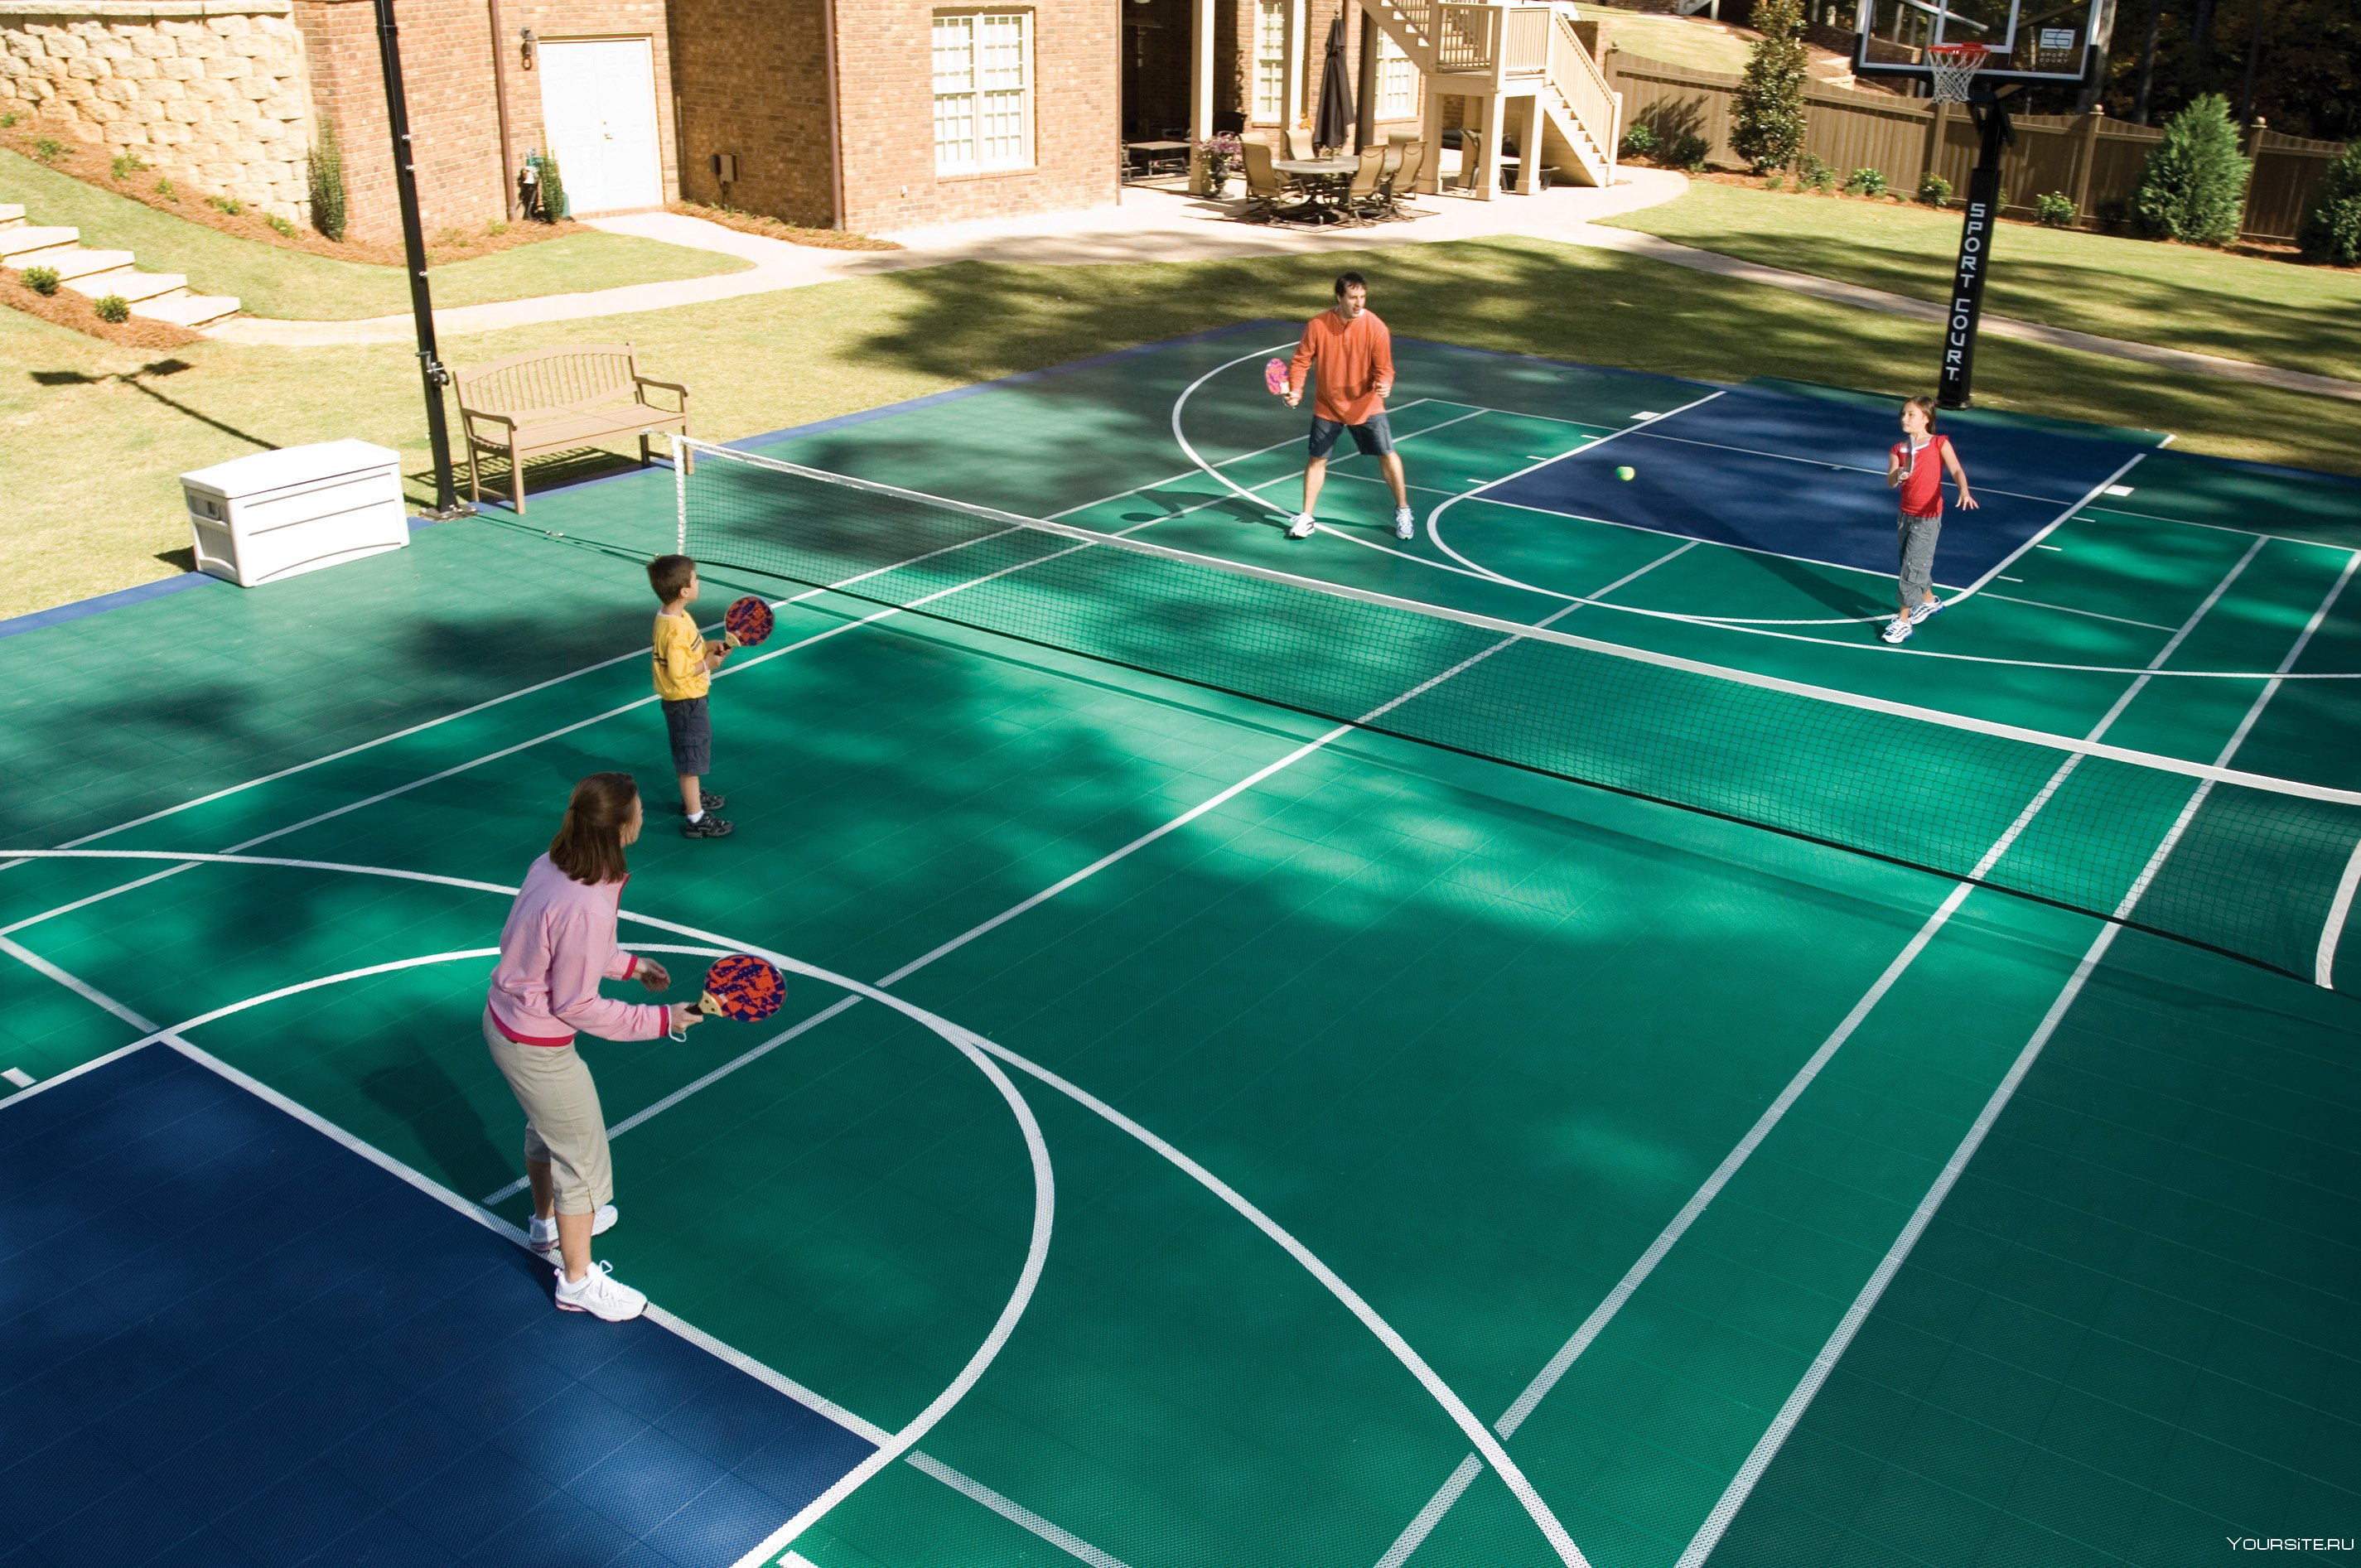 Игры бадминтон теннис. Спортплощадка теннис-баскетбол. Спортивная площадка. Баскетбольная площадка. Теннисный корт и баскетбольная площадка.